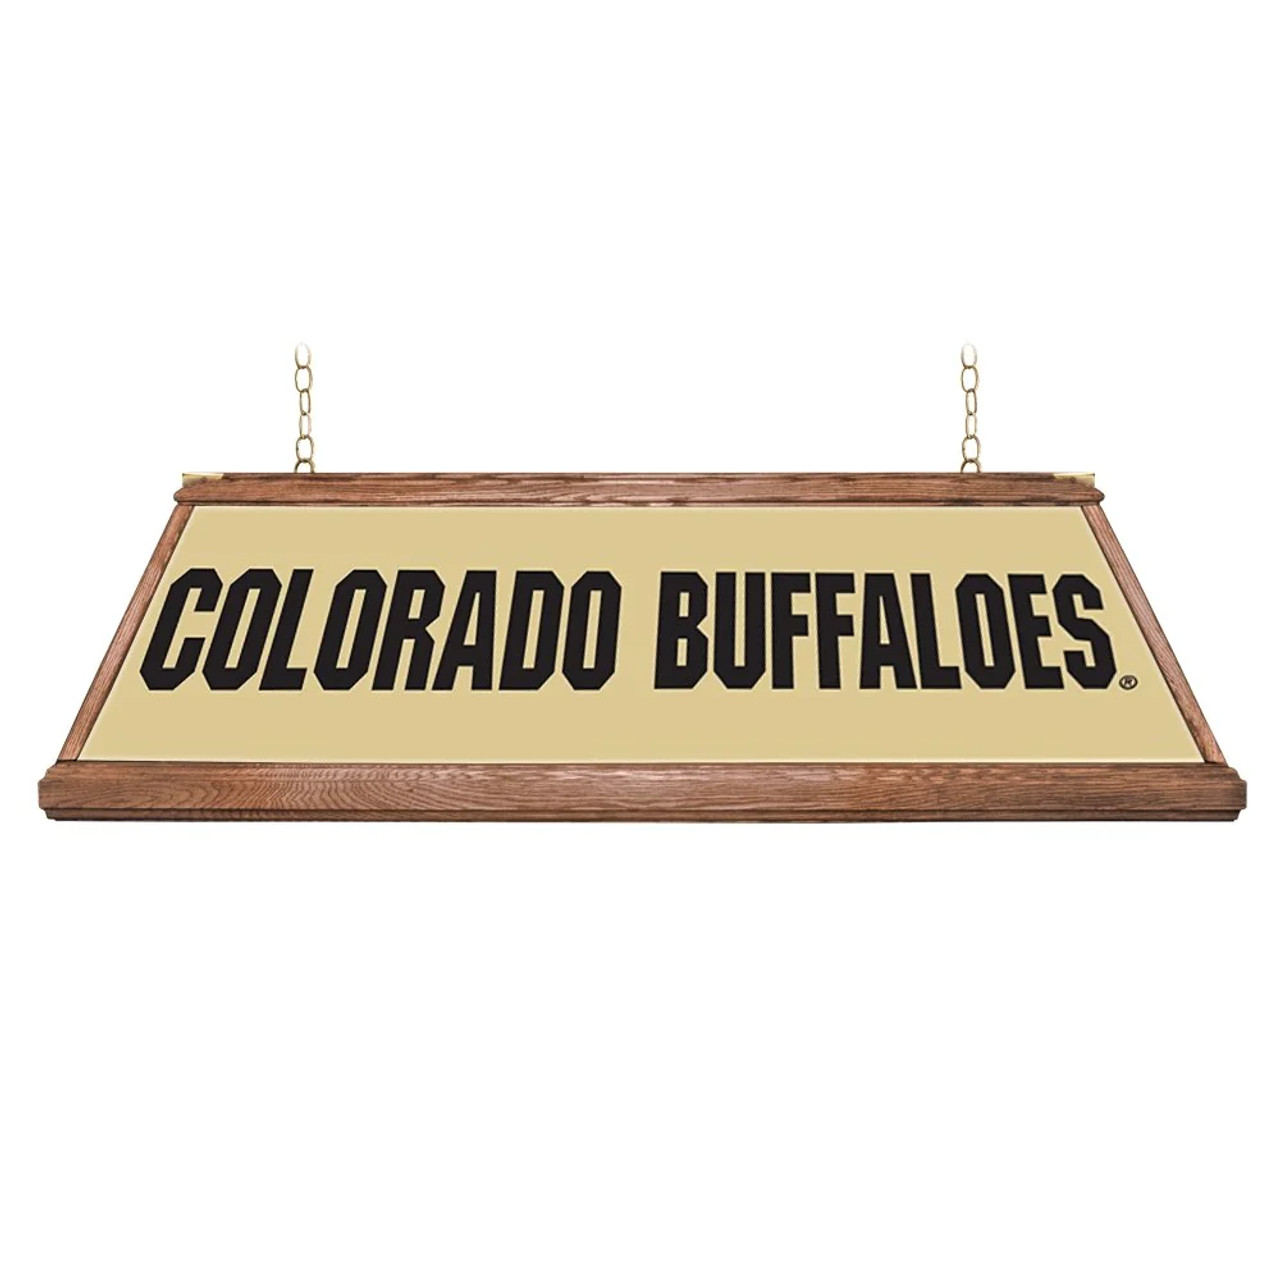 Colorado, Buffaloes, Premium, Wood, Billiard, Pool, Table, Light, Lamp, NCCOBF-330-01A, NCCOBF-330-01B, The Fan-Brand, 686082112451